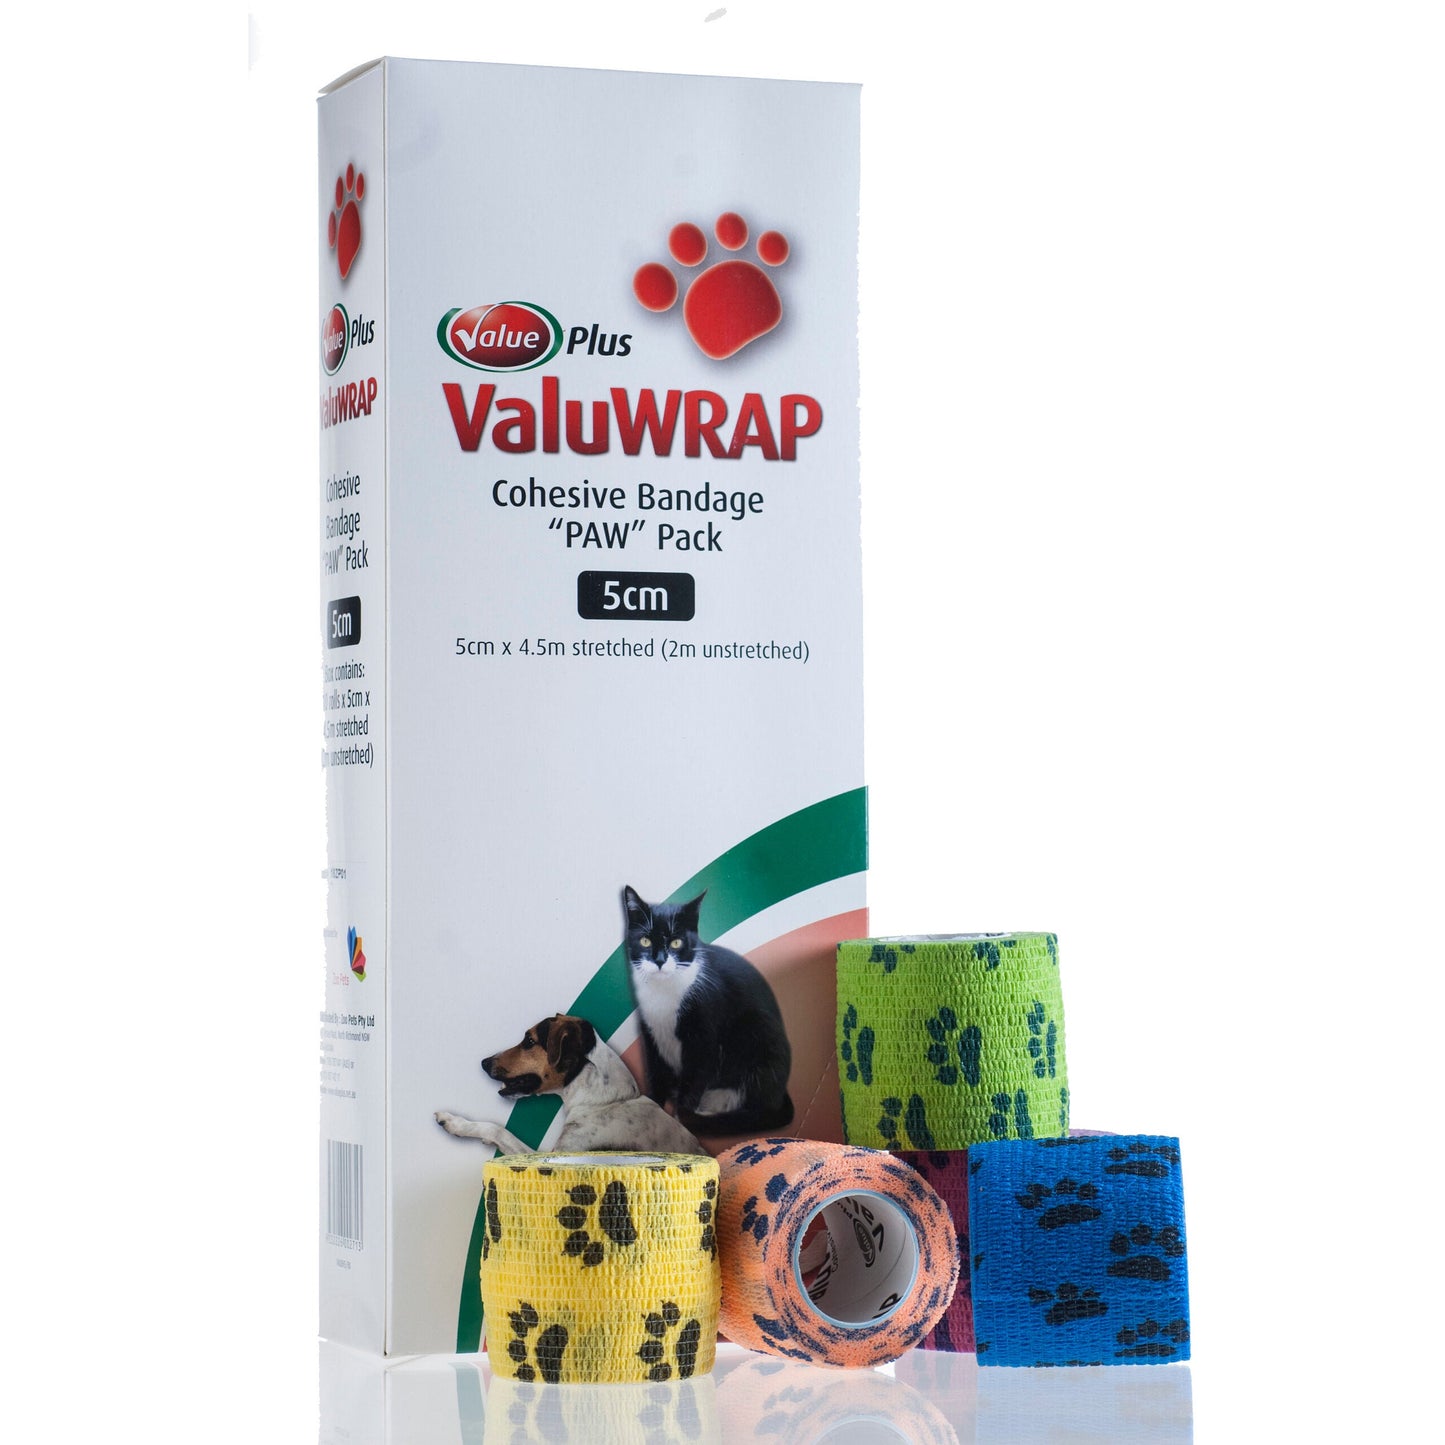 5cm ValuWRAP box and rolls